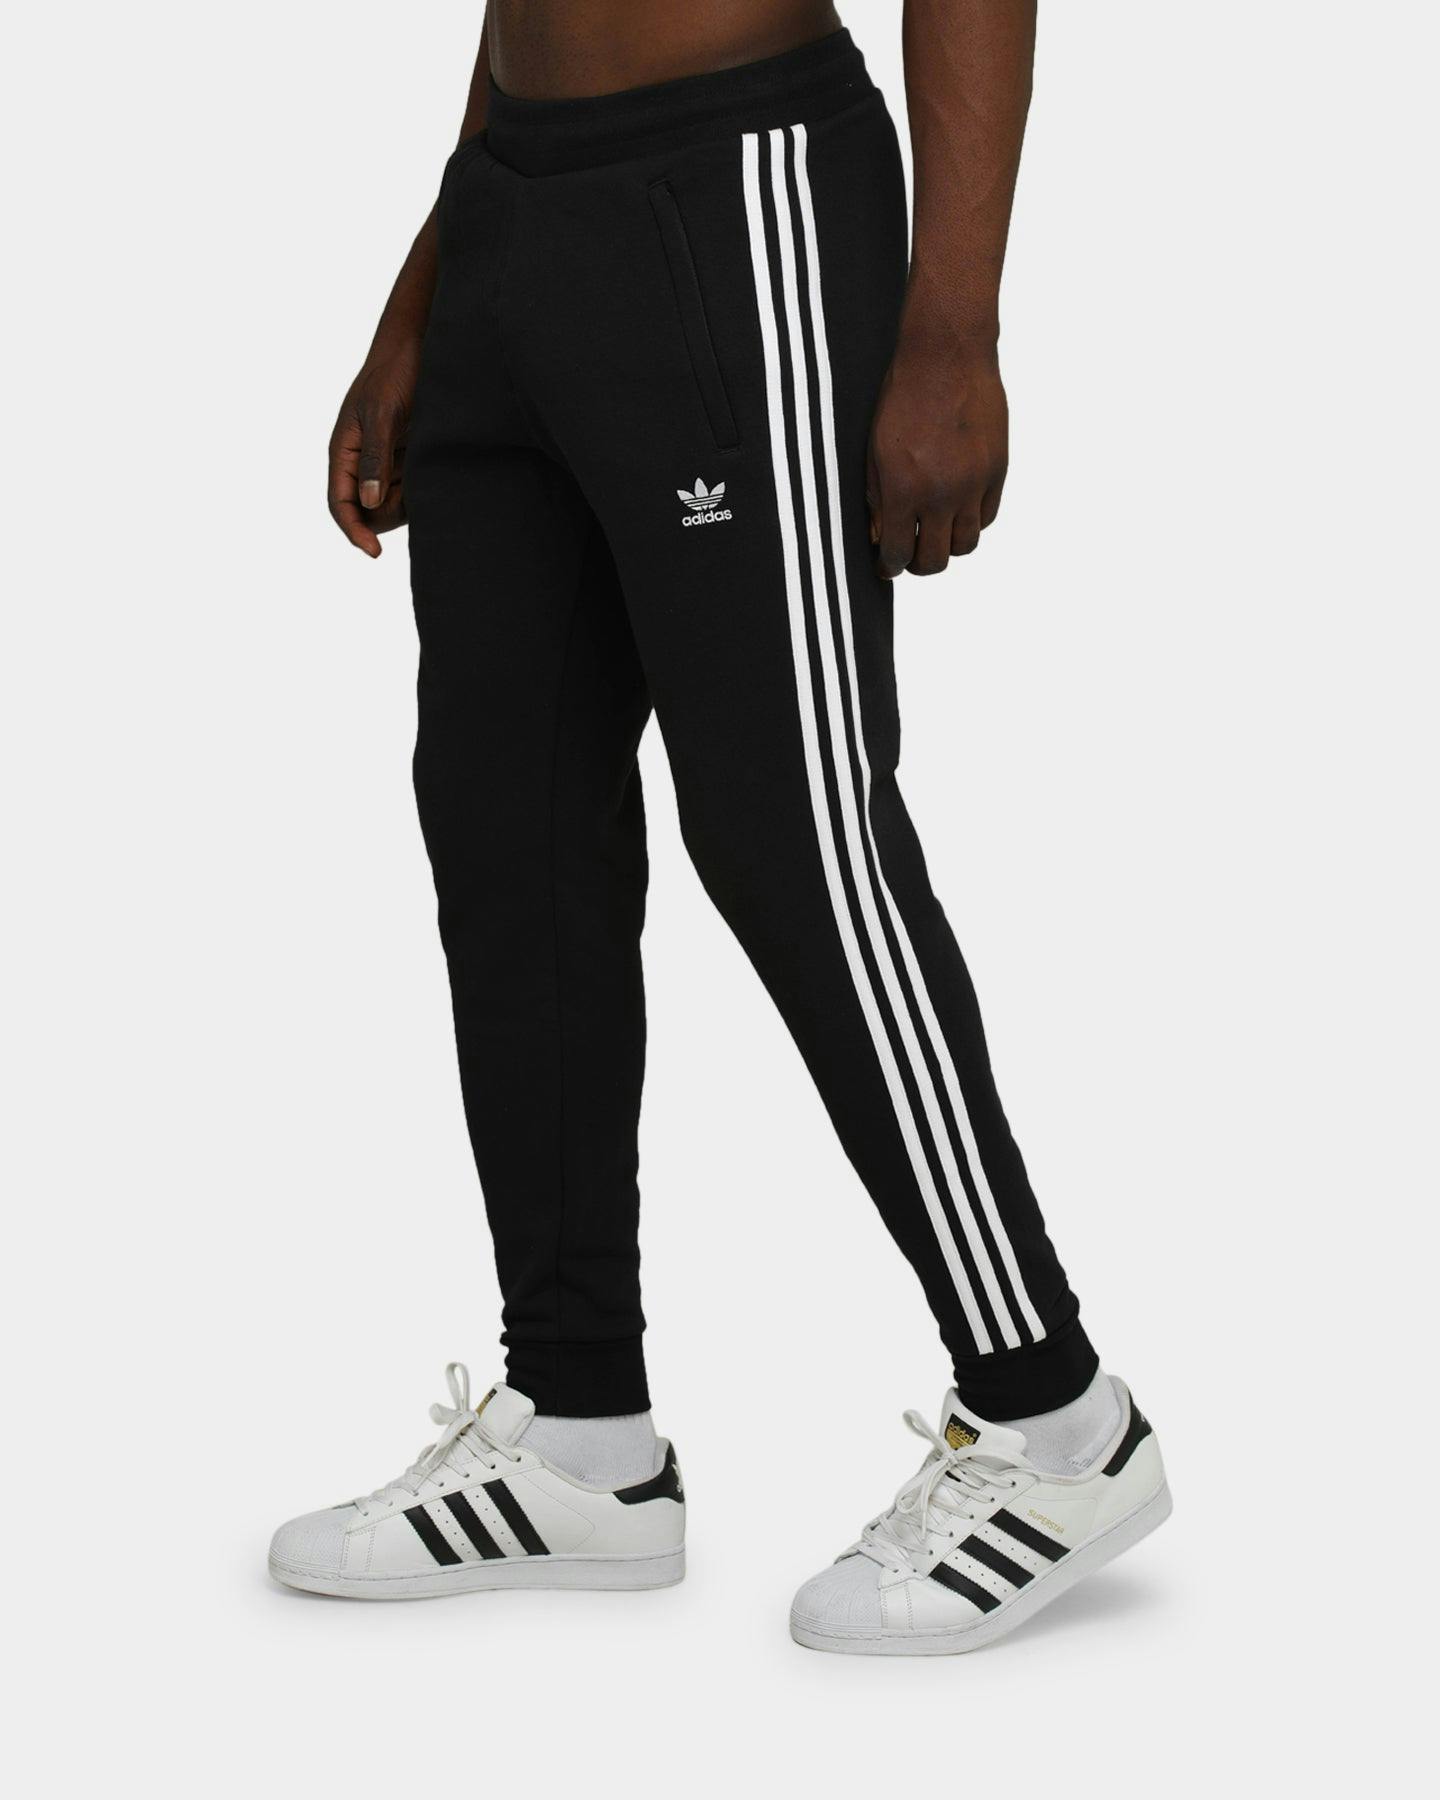 Adidas 3-Stripes Pant Black | Culture Kings NZ